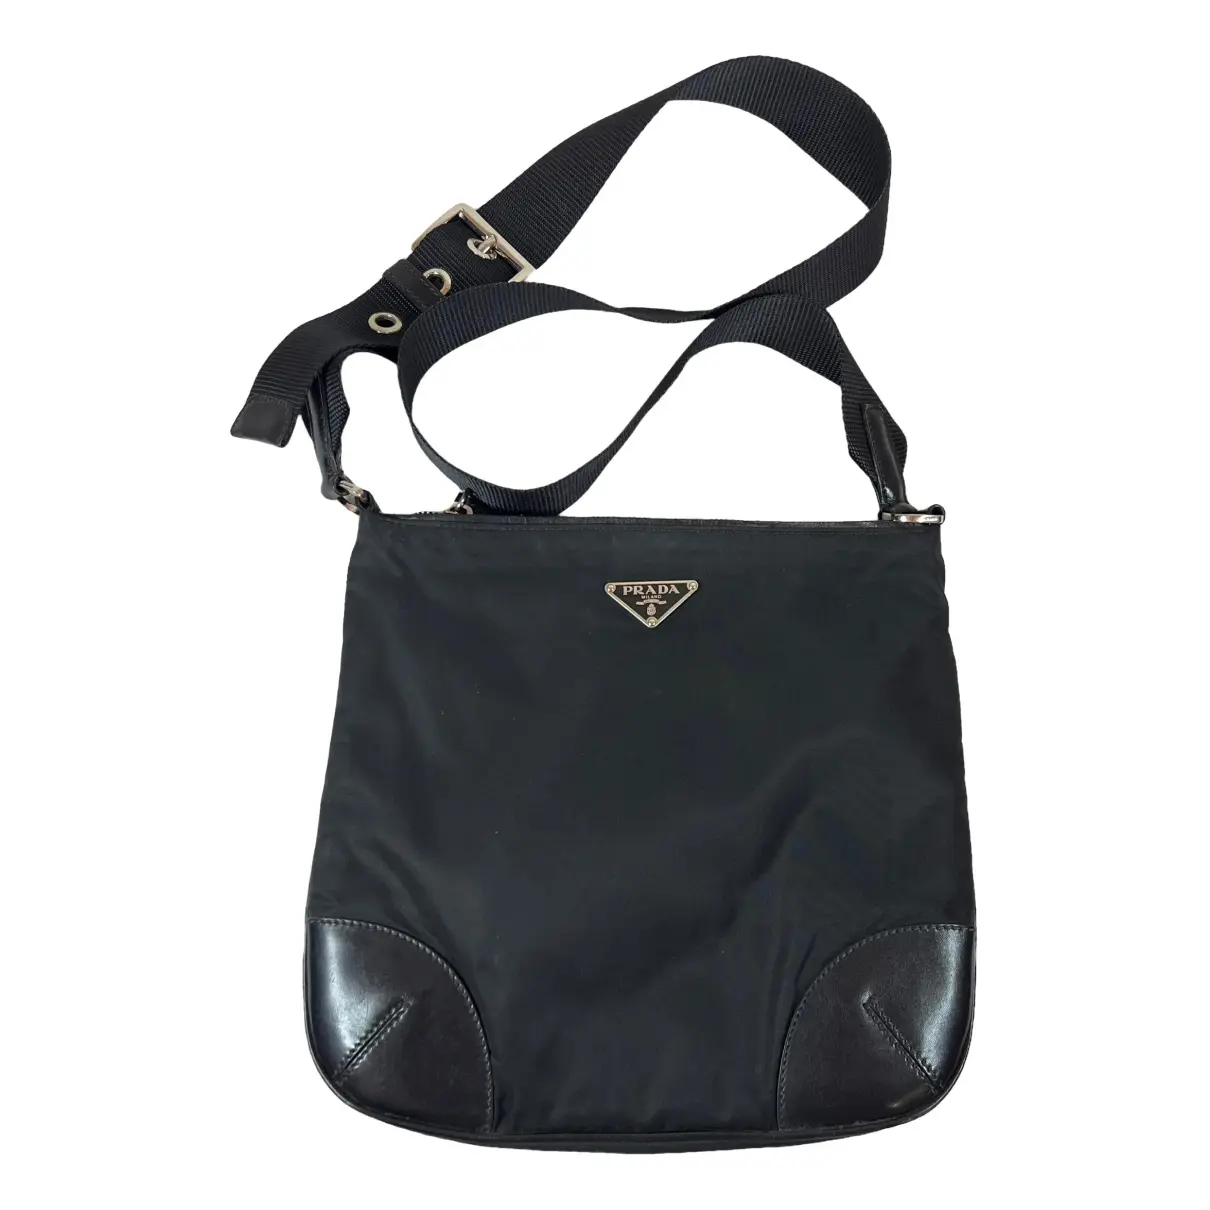 Re-Nylon cloth handbag